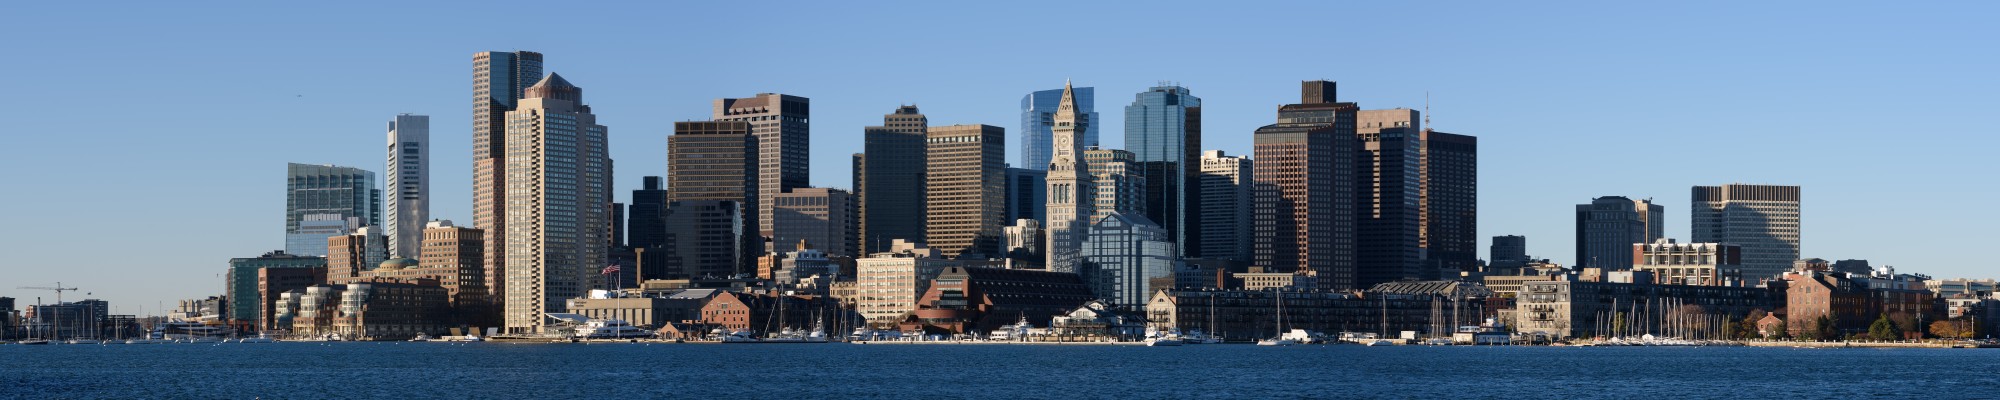 Boston skyline from East Boston November 2016 panorama 5